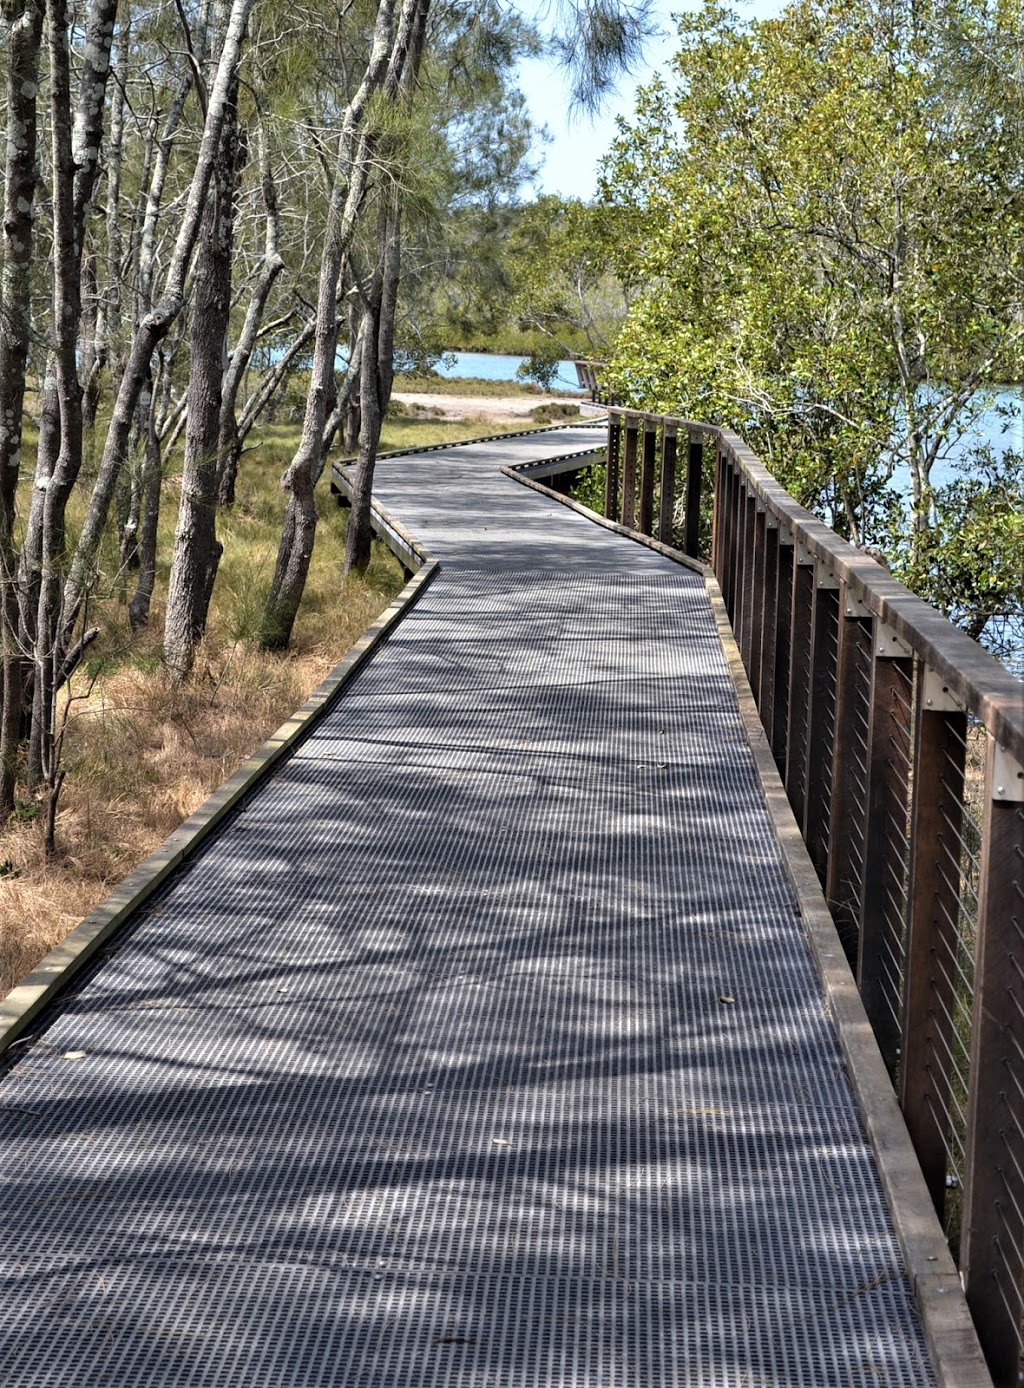 Tchoobey reserve | park | David Fleay Wildlife Park, Loman Ln, Burleigh Heads QLD 4220, Australia